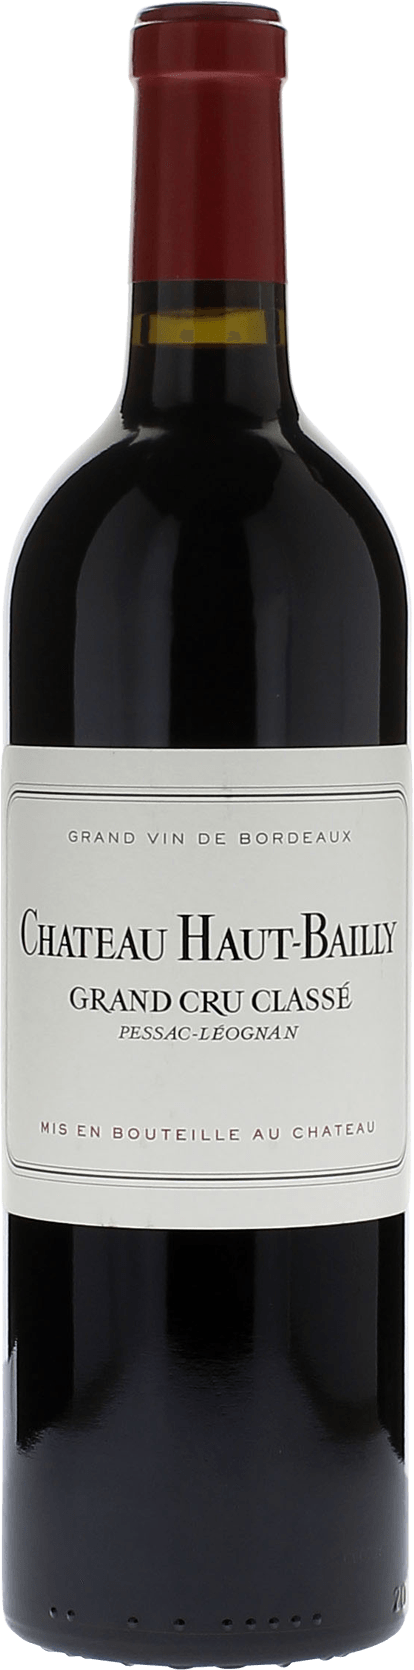 Haut bailly 1994 cru class Pessac-Lognan, Bordeaux rouge